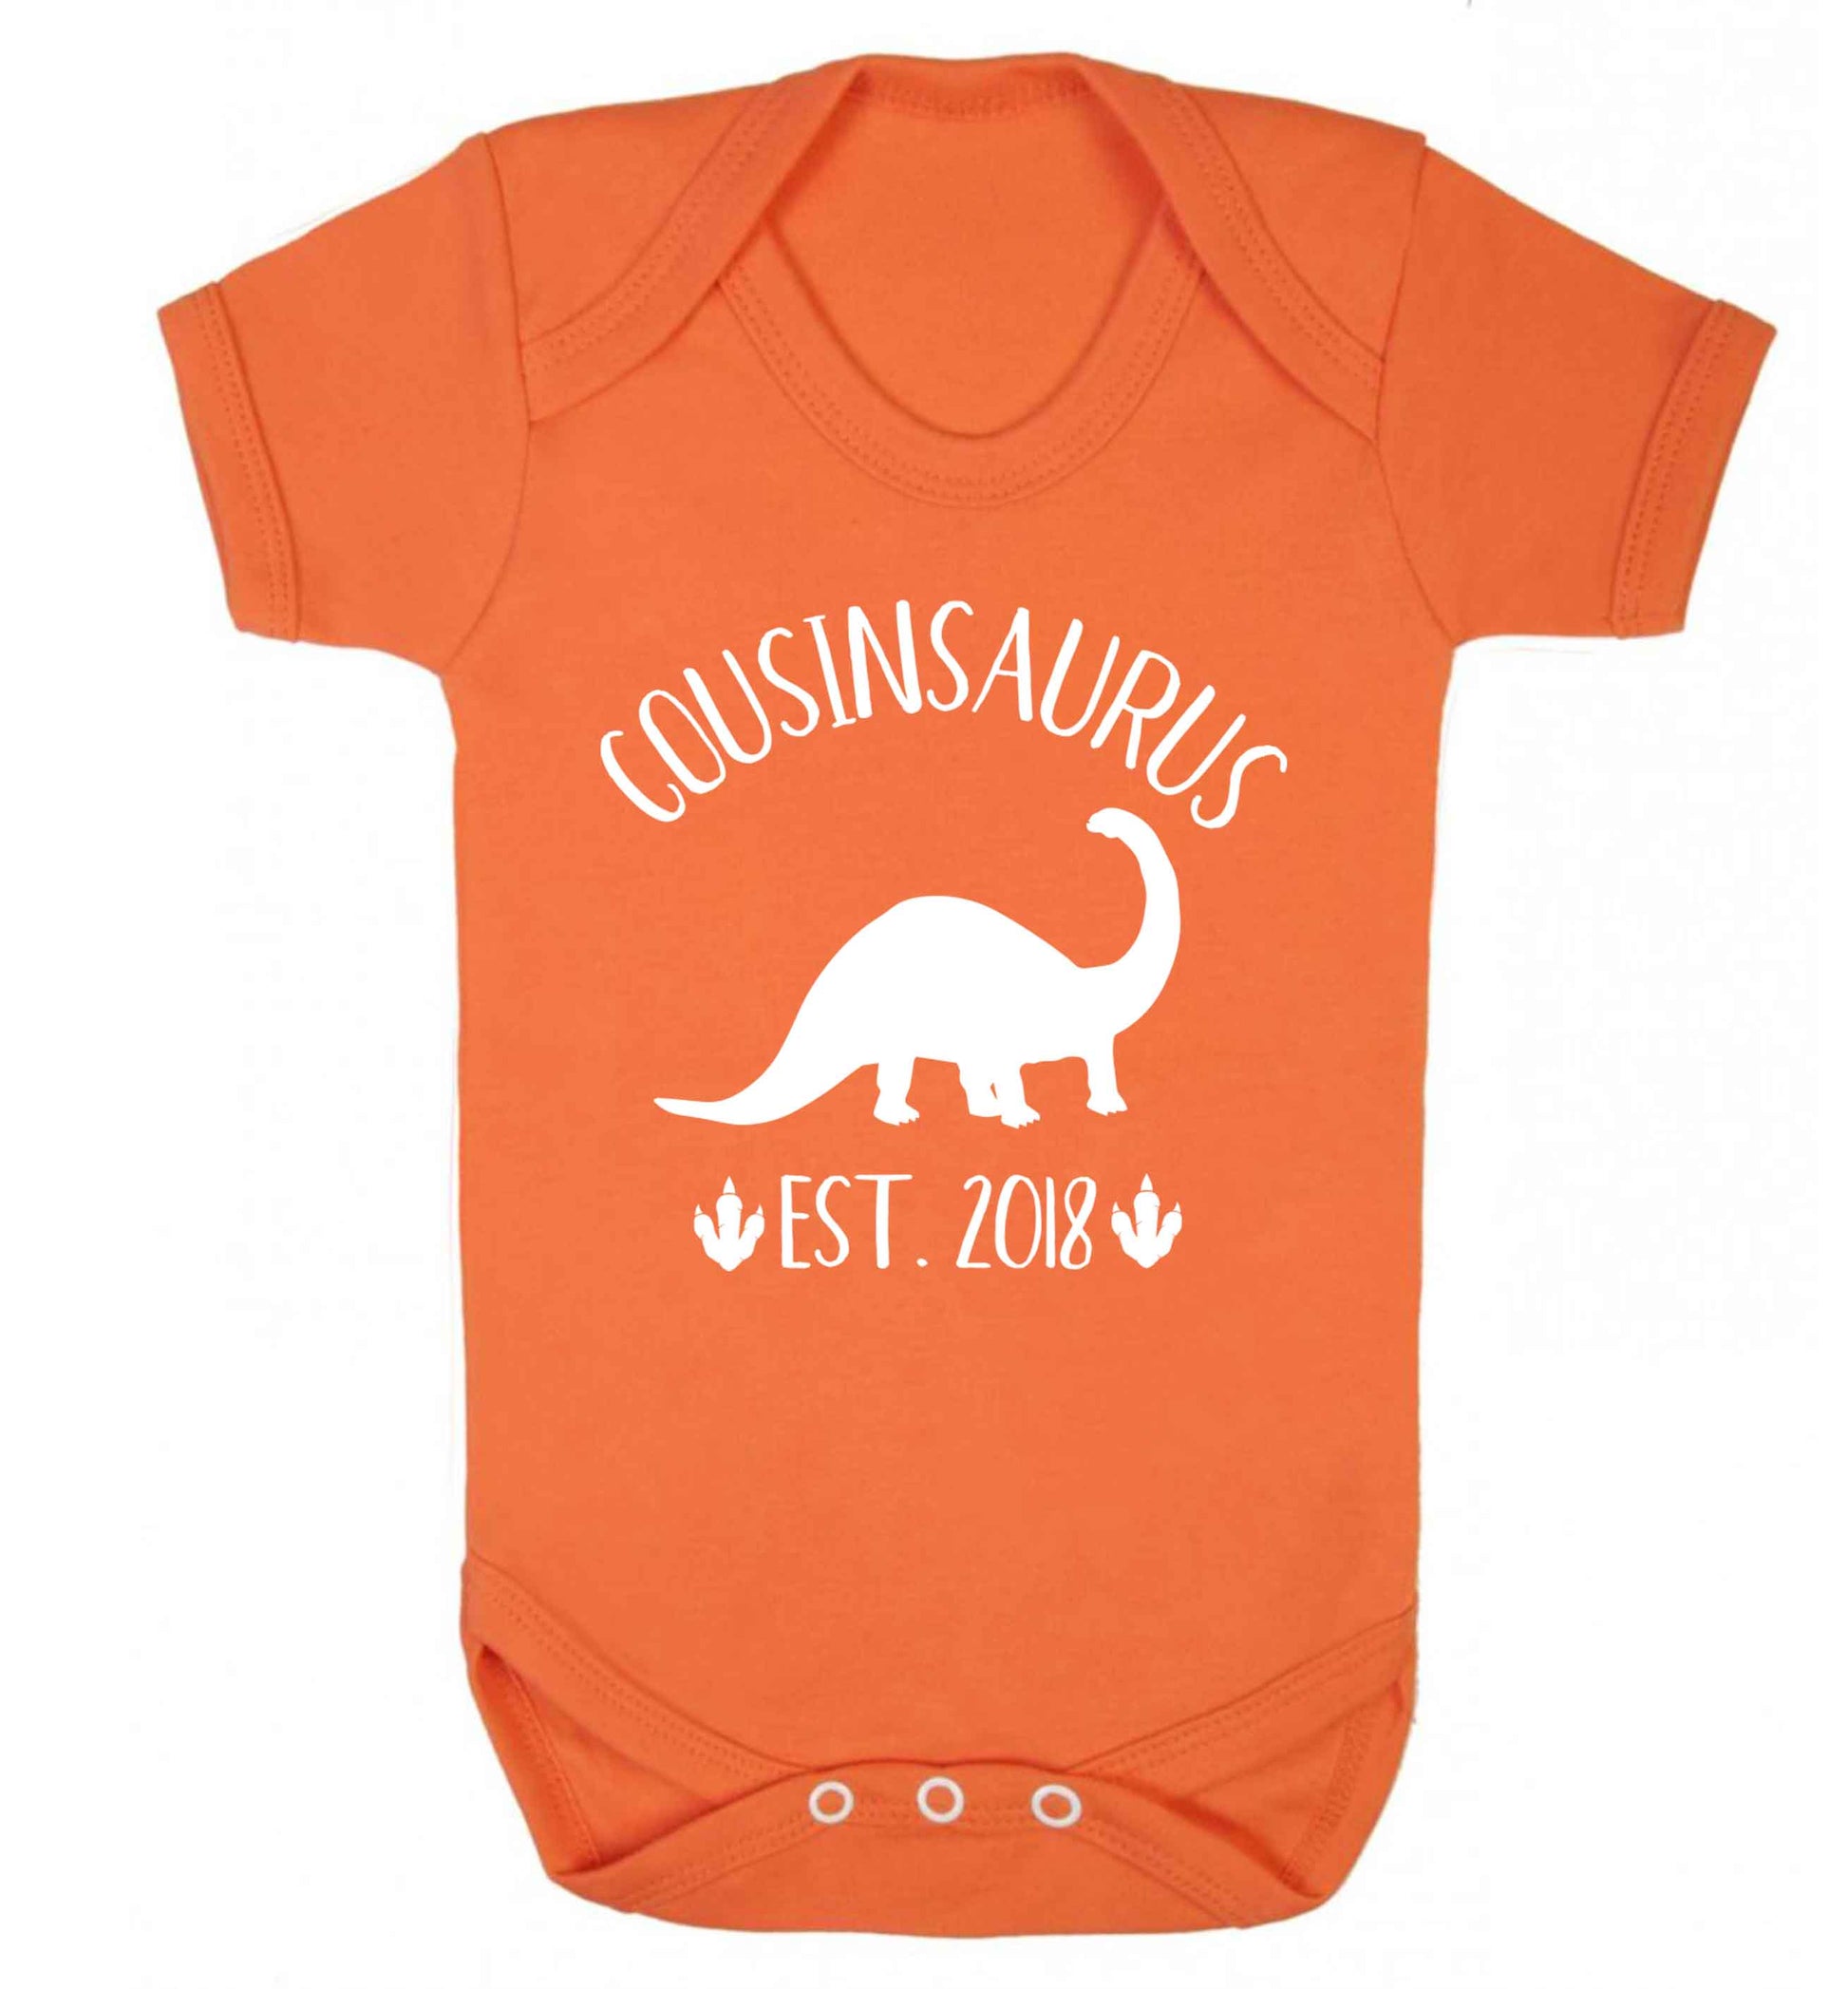 Personalised cousinsaurus since (custom date) Baby Vest orange 18-24 months